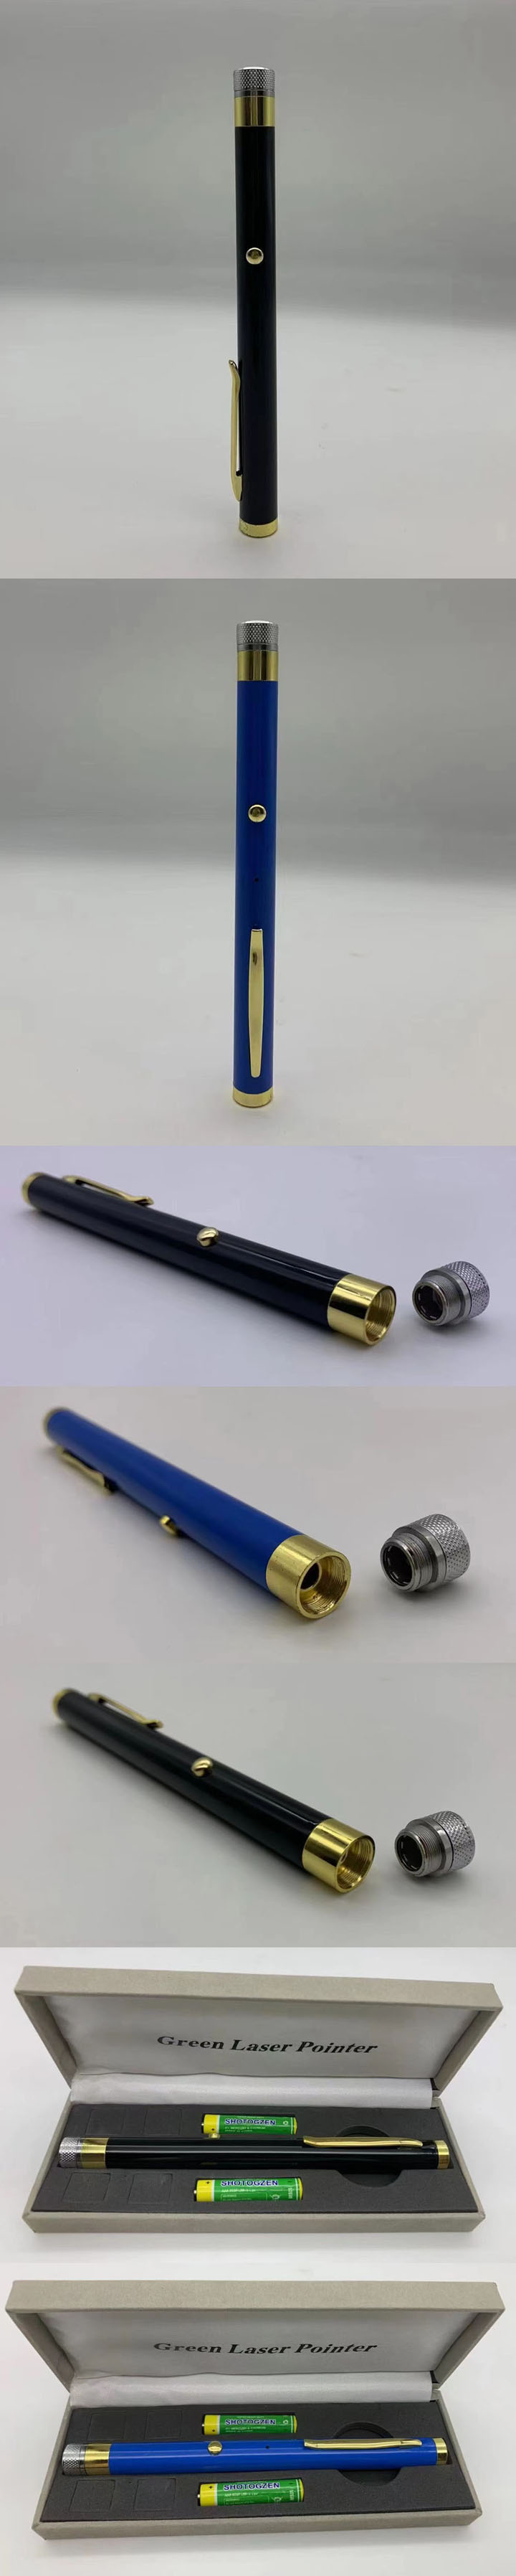 stylo laser 488 nm 60 mW